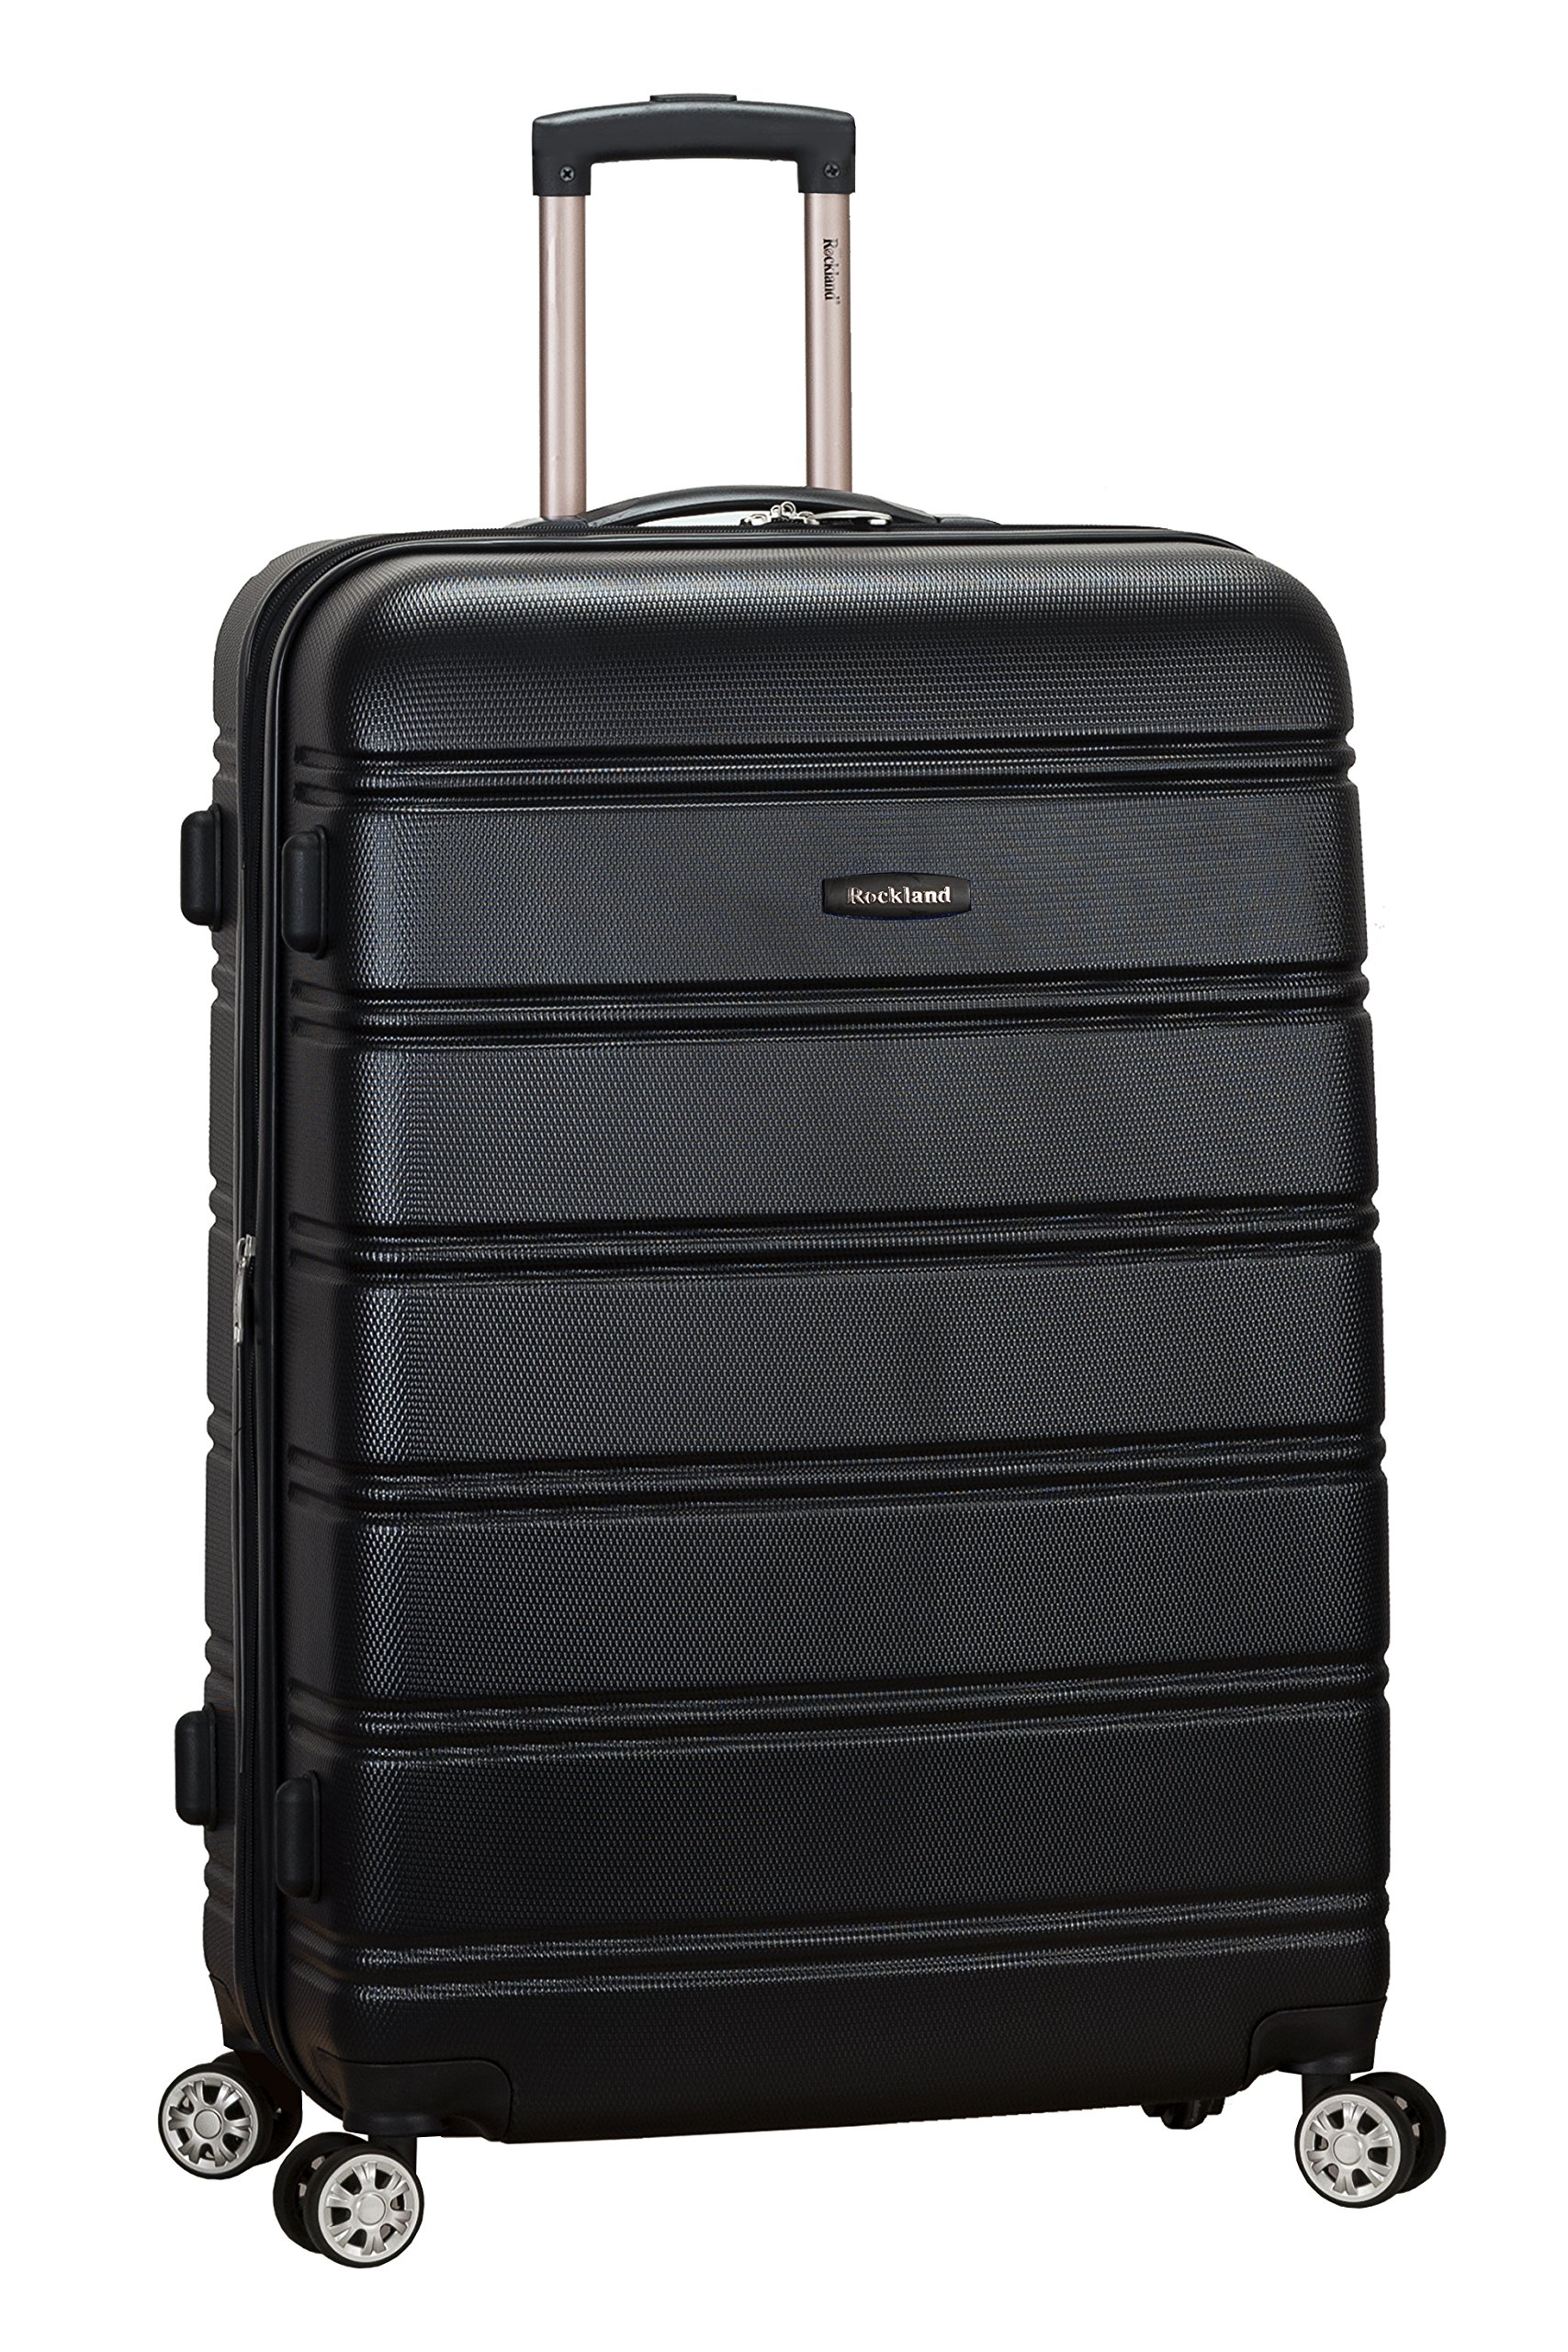 28" Rockland Melbourne Hardside Expandable Spinner Wheel Luggage Suitcase (Black) $58.50 + Free Shipping